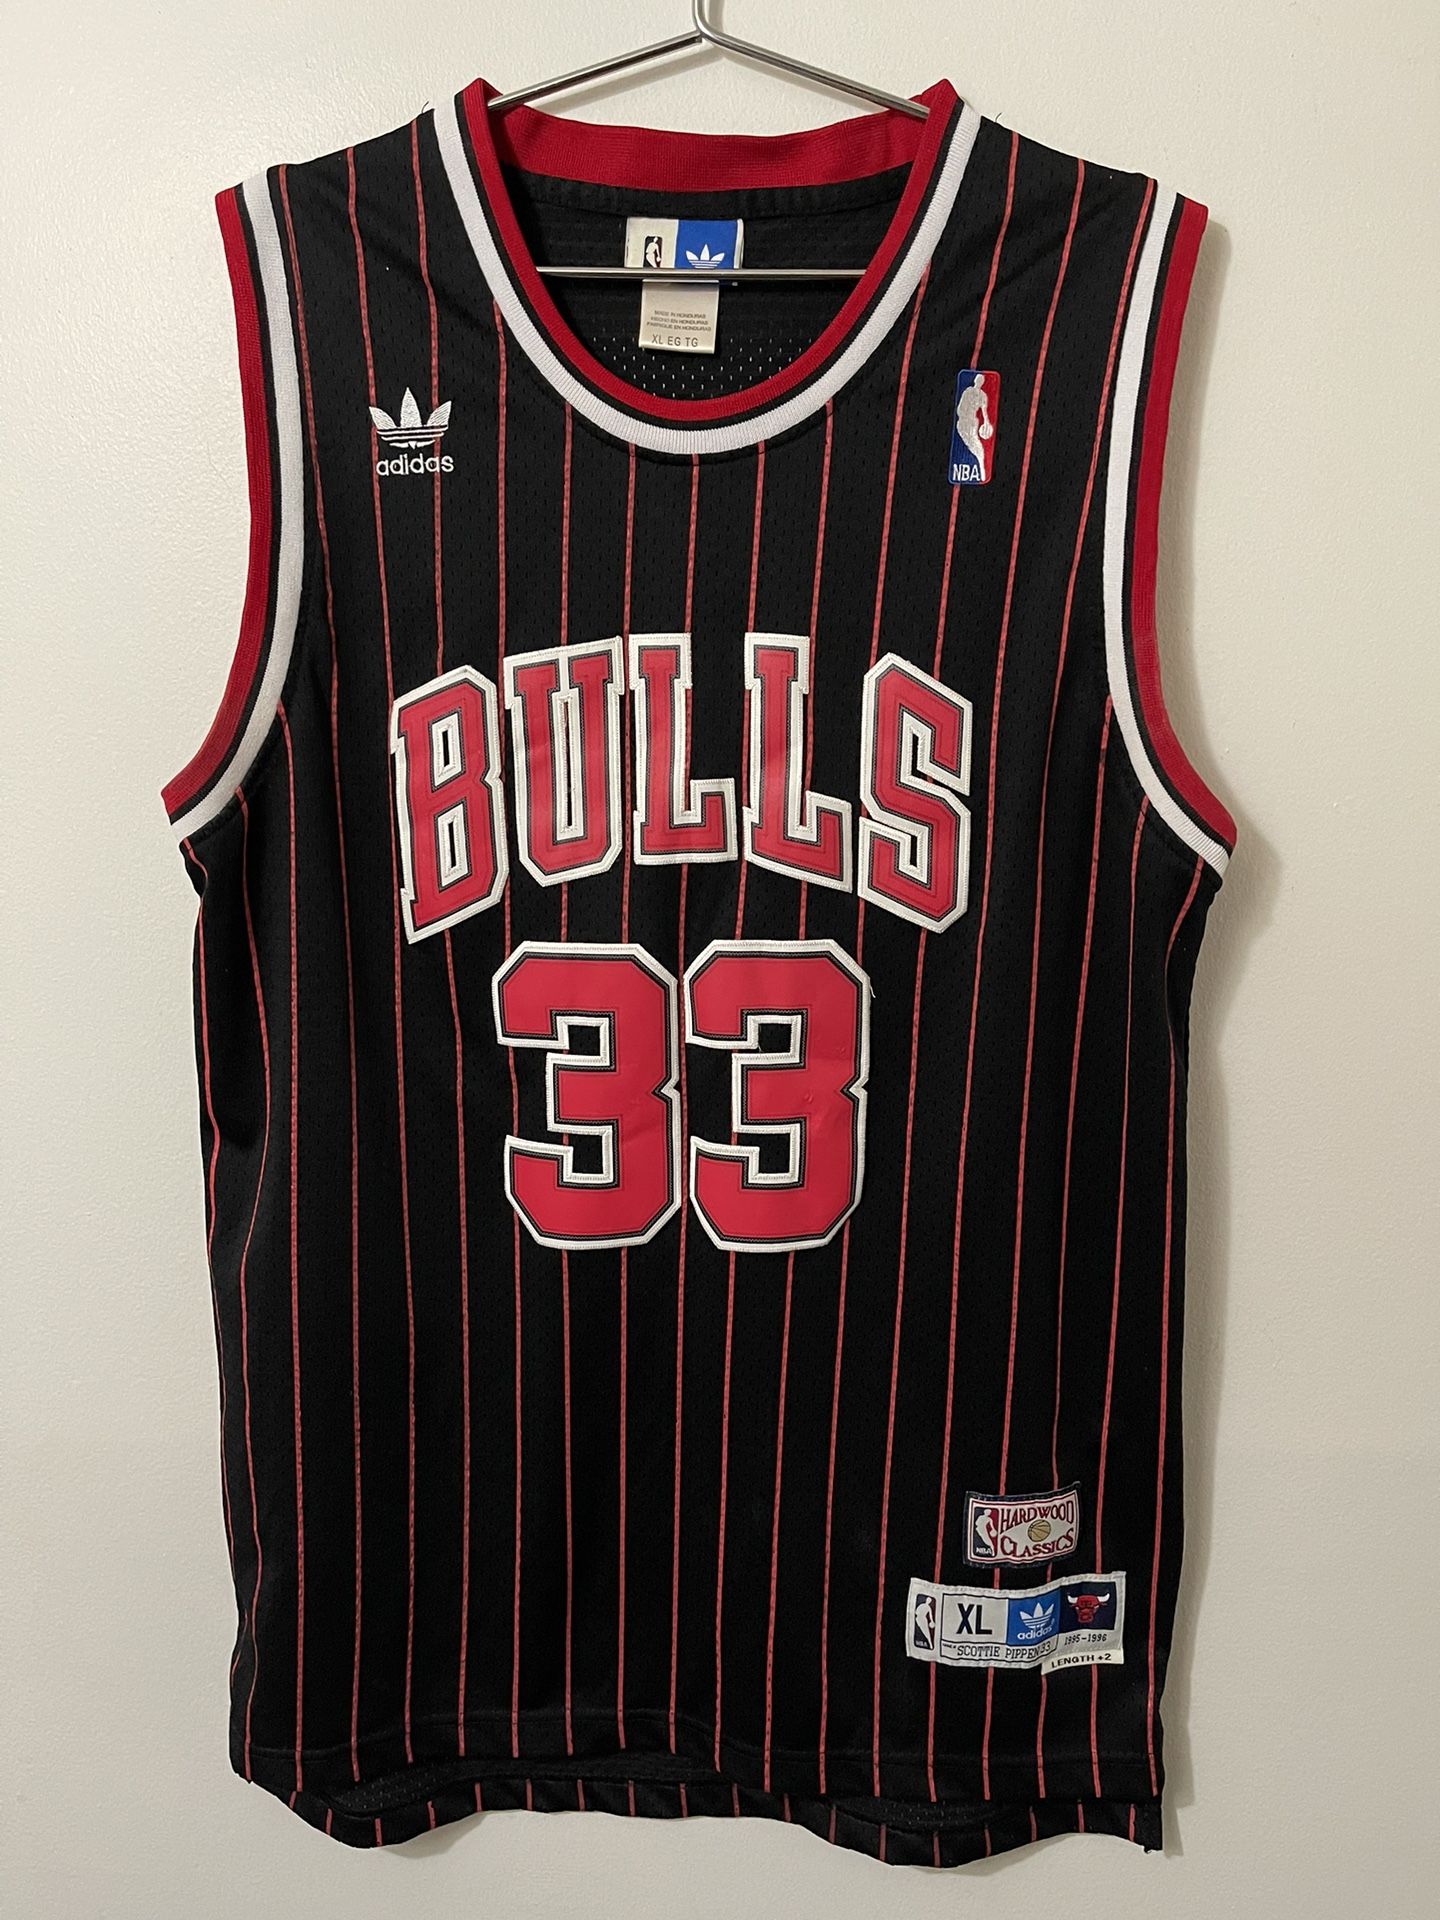 1995-96 Adidas Scottie Pippen #33 Chicago Bulls Jersey